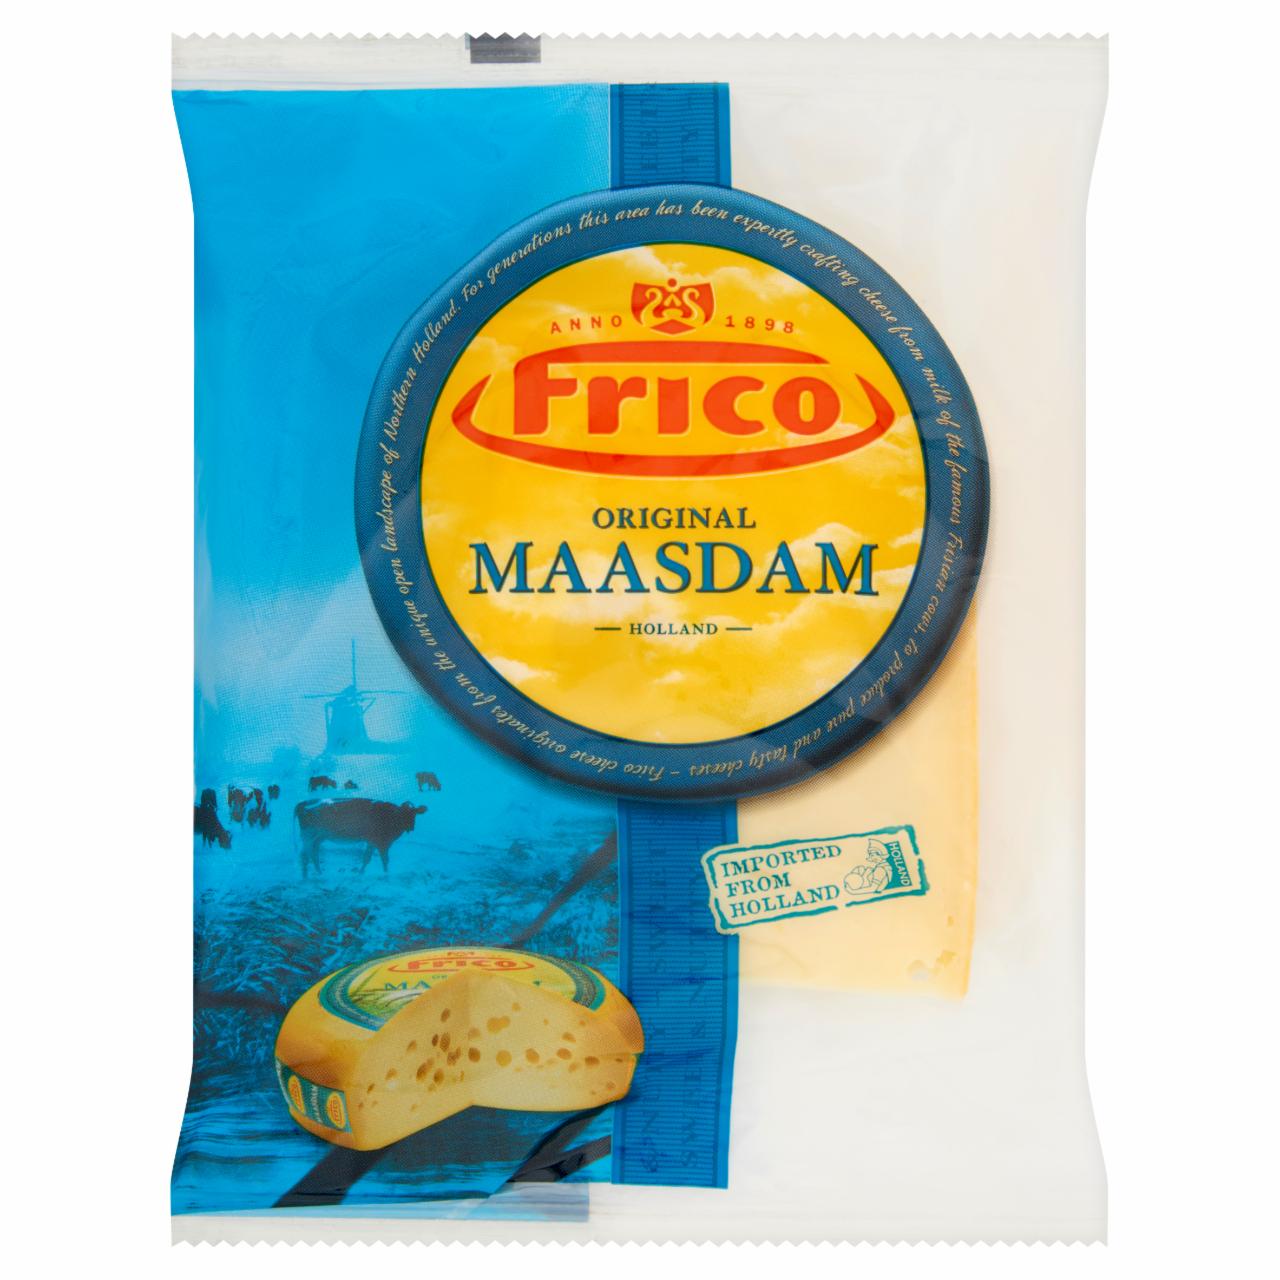 Képek - Frico Maasdam darabolt sajt 260 g